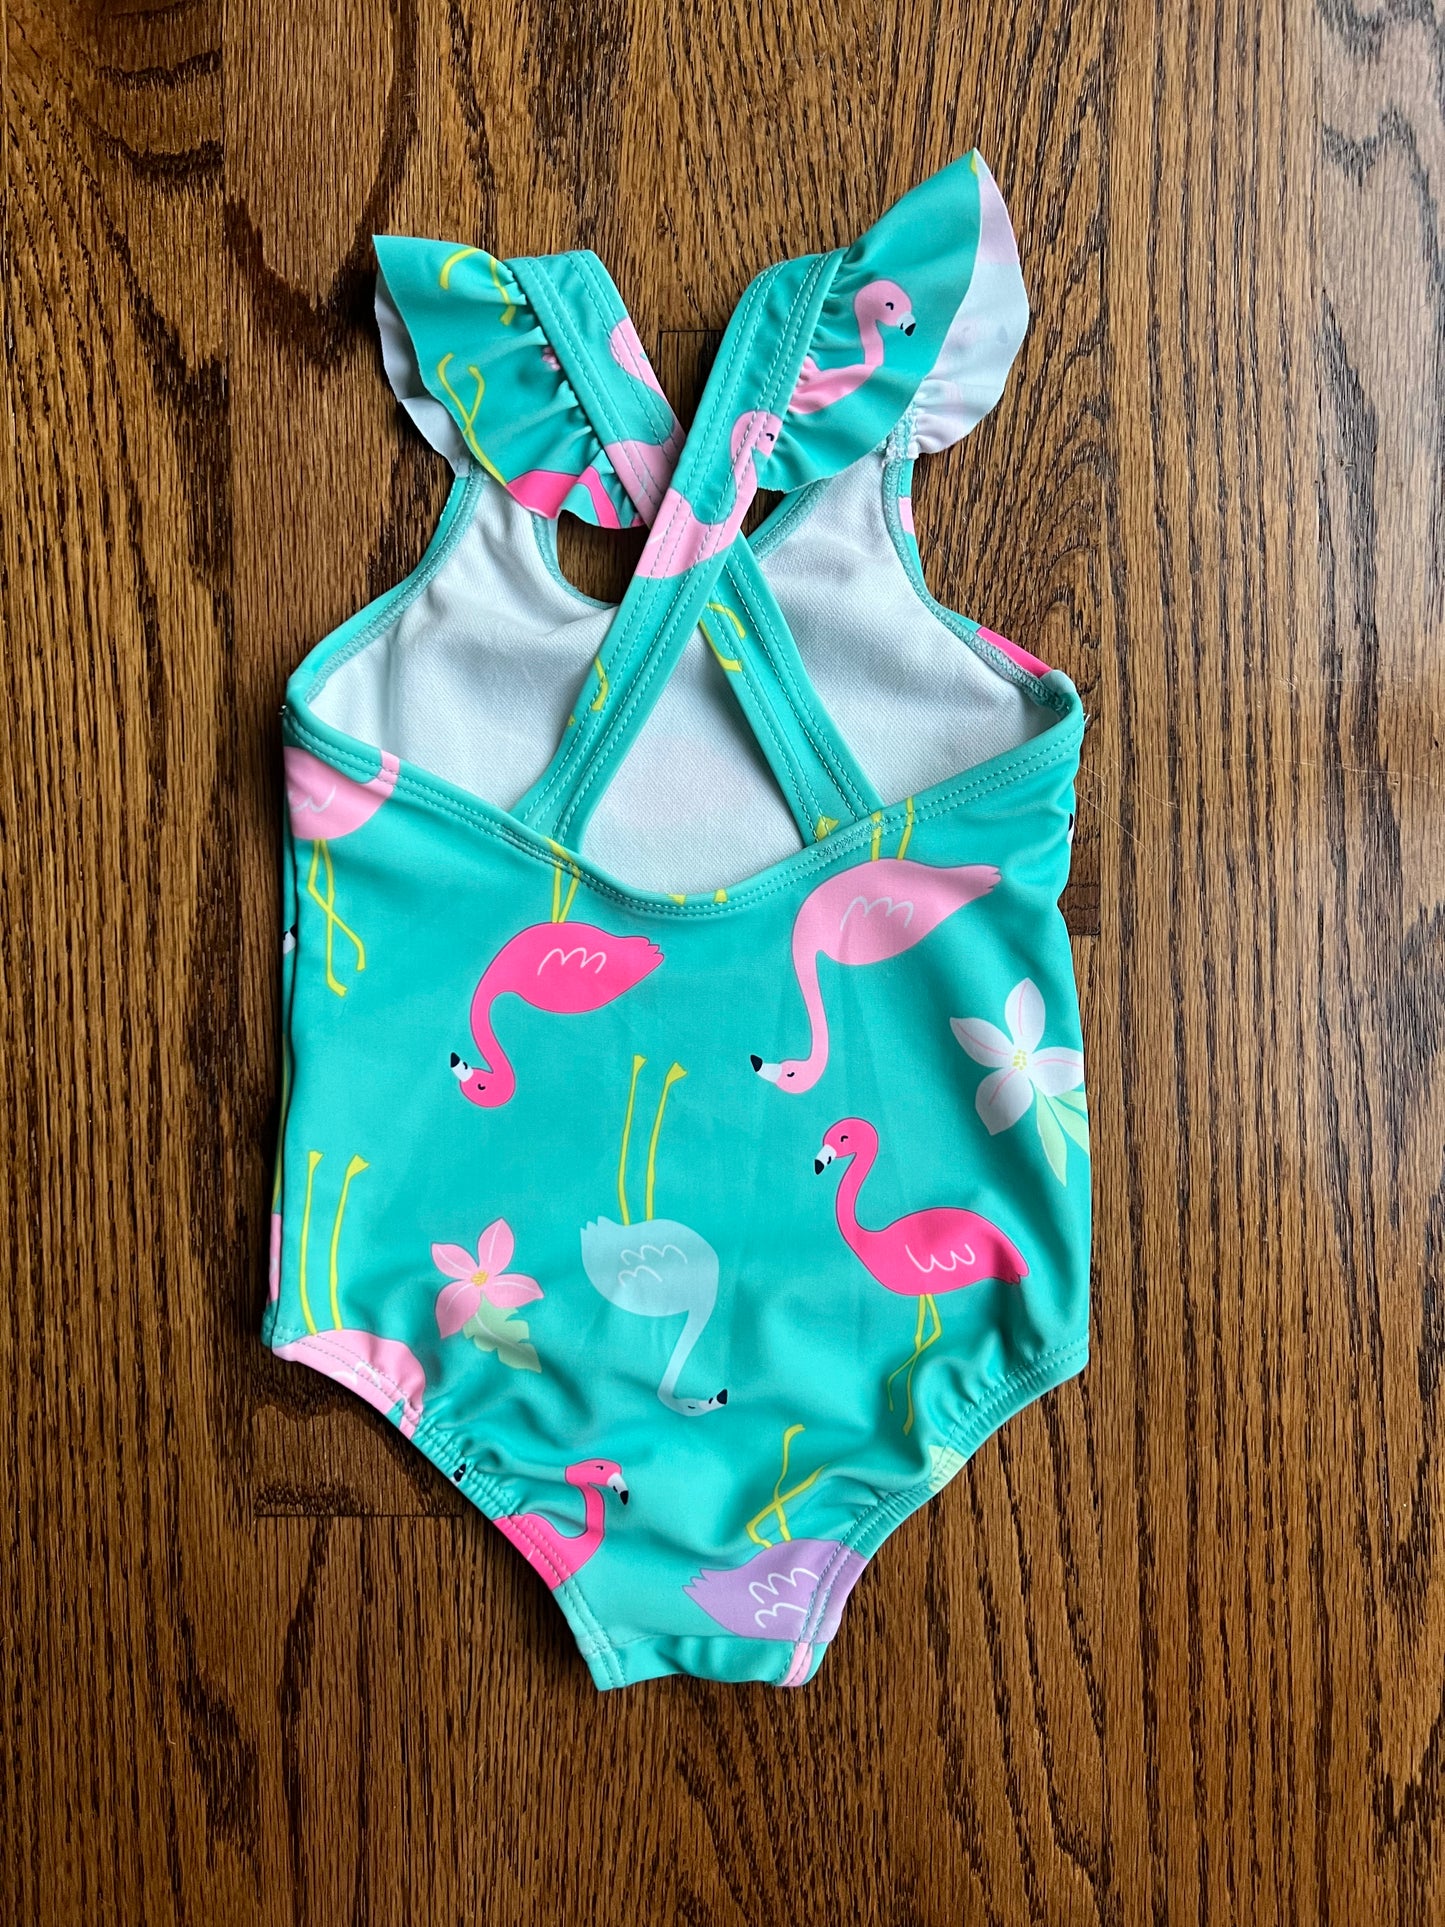 Carters Baby Girl 12M Flamingo Swimsuit, NWOT